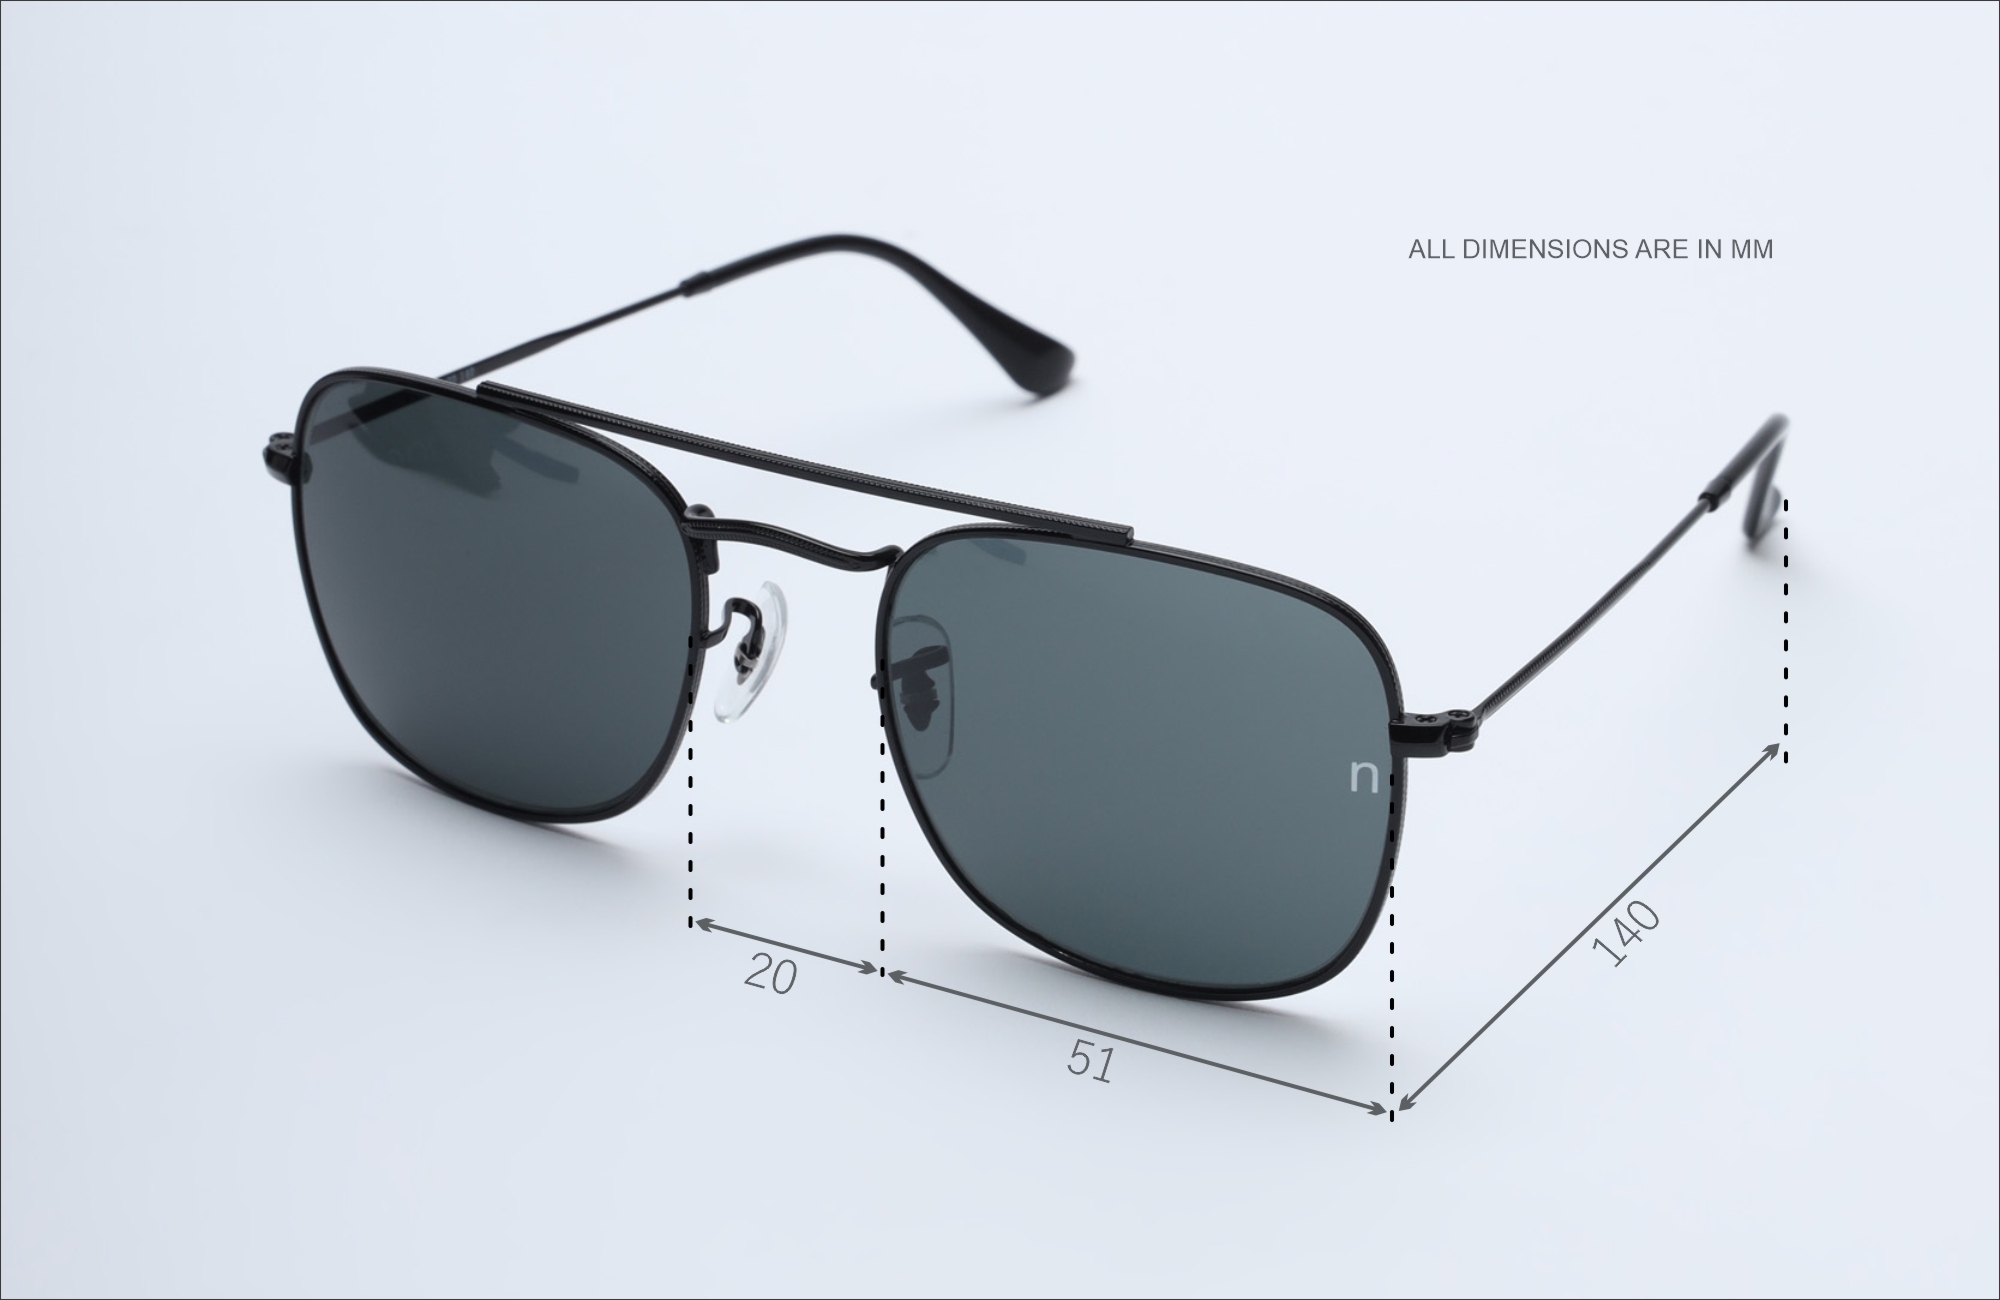 Noggah Stainless Steel Black Frame with Black Glass UV Protection Lens  Large Size Unisex Sunglasses - Noggah